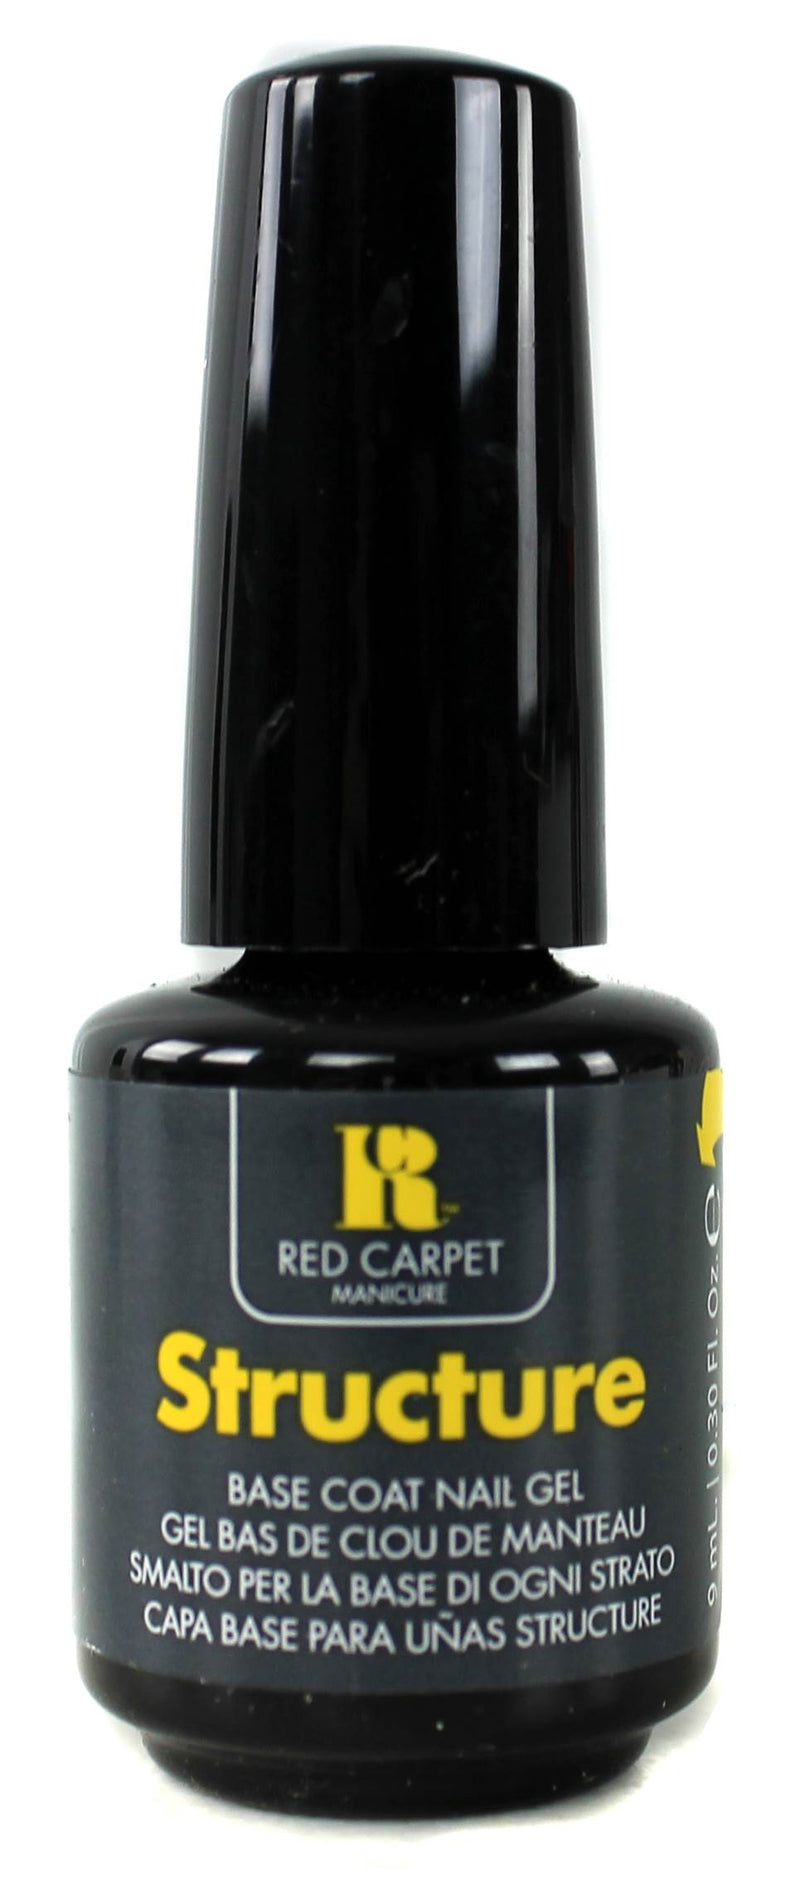 Red Carpet Manicure Portable LED Package Soak Off Gel Nail Polish Starter Kit